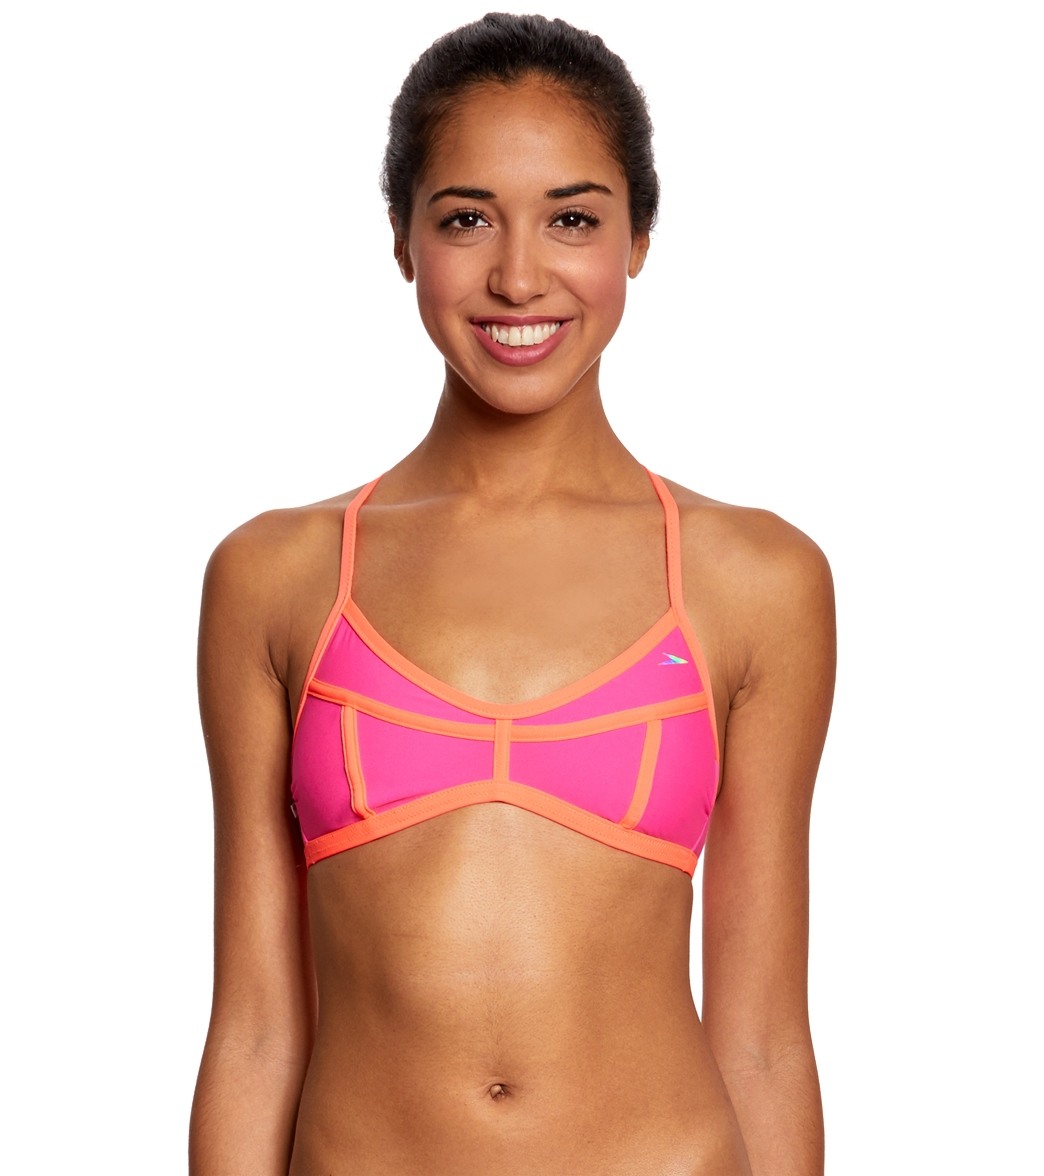 Speedo Missy Franklin Endurance Lite Colorblock Tie Back Swimsuit Top - Electric Pink Large Polyester/Pbt - Swimoutlet.com